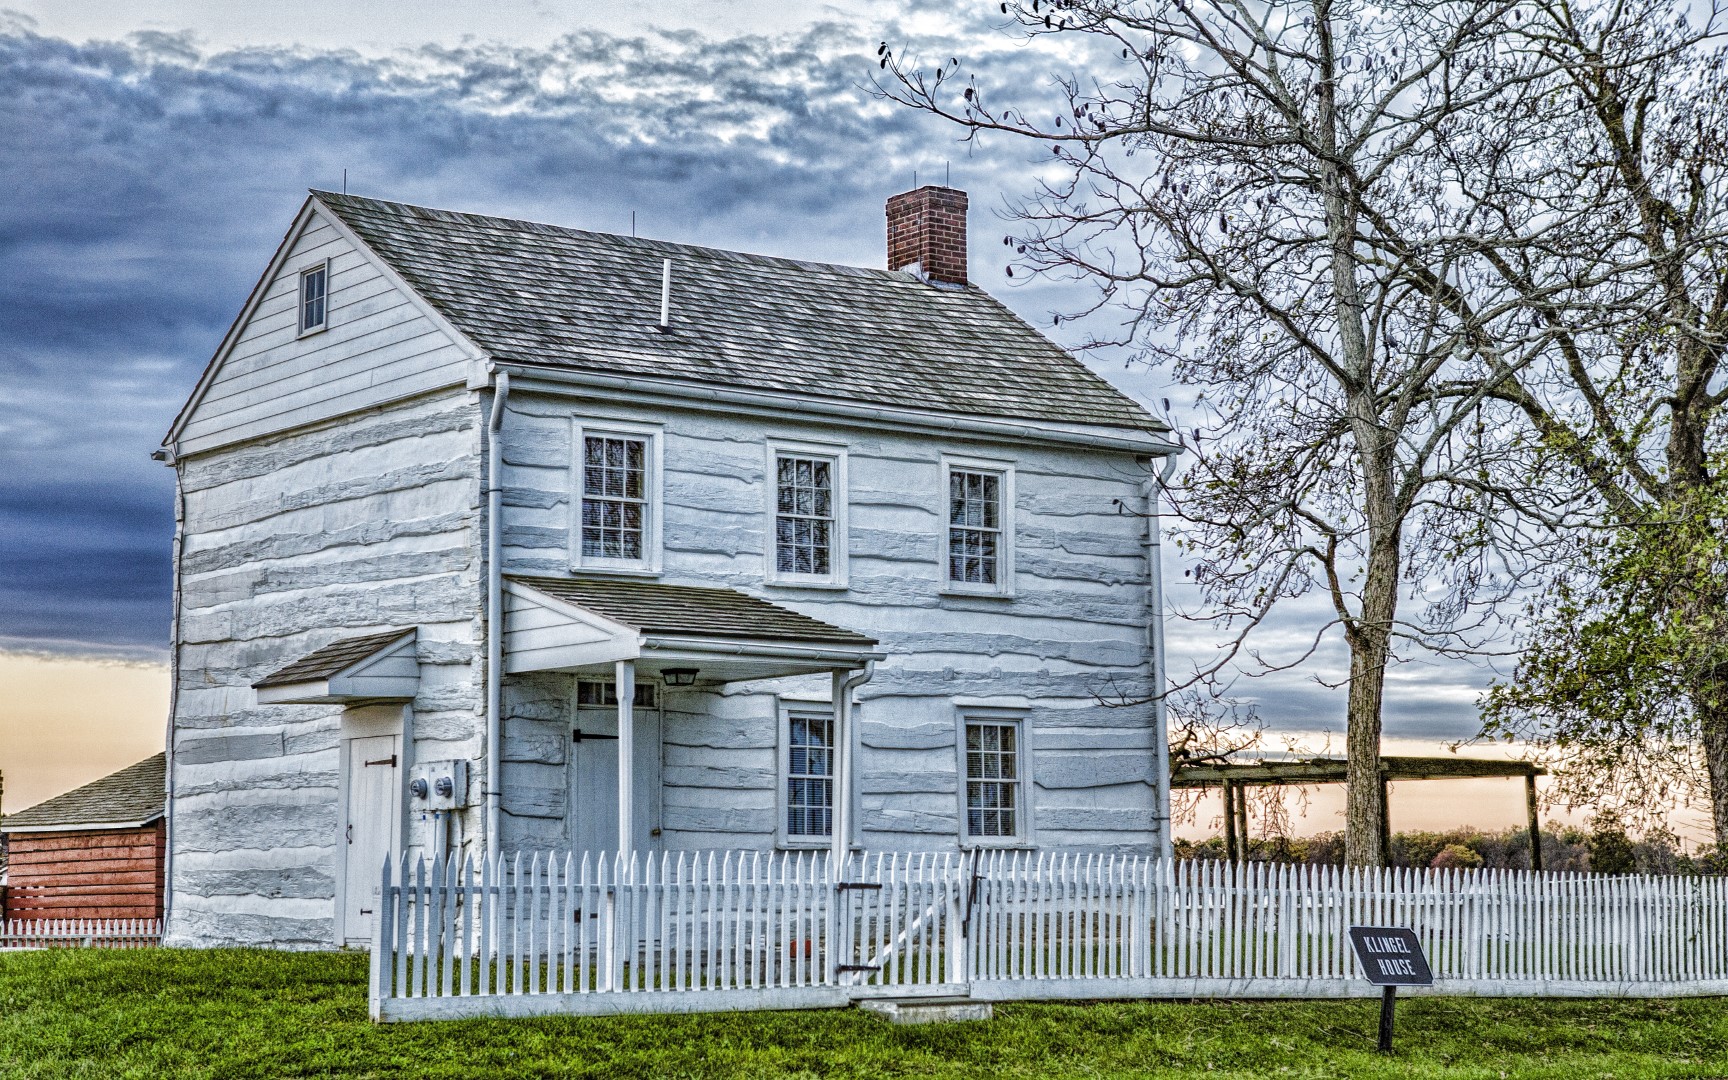 The Klingel House in Gettysburg Pennsyilvania